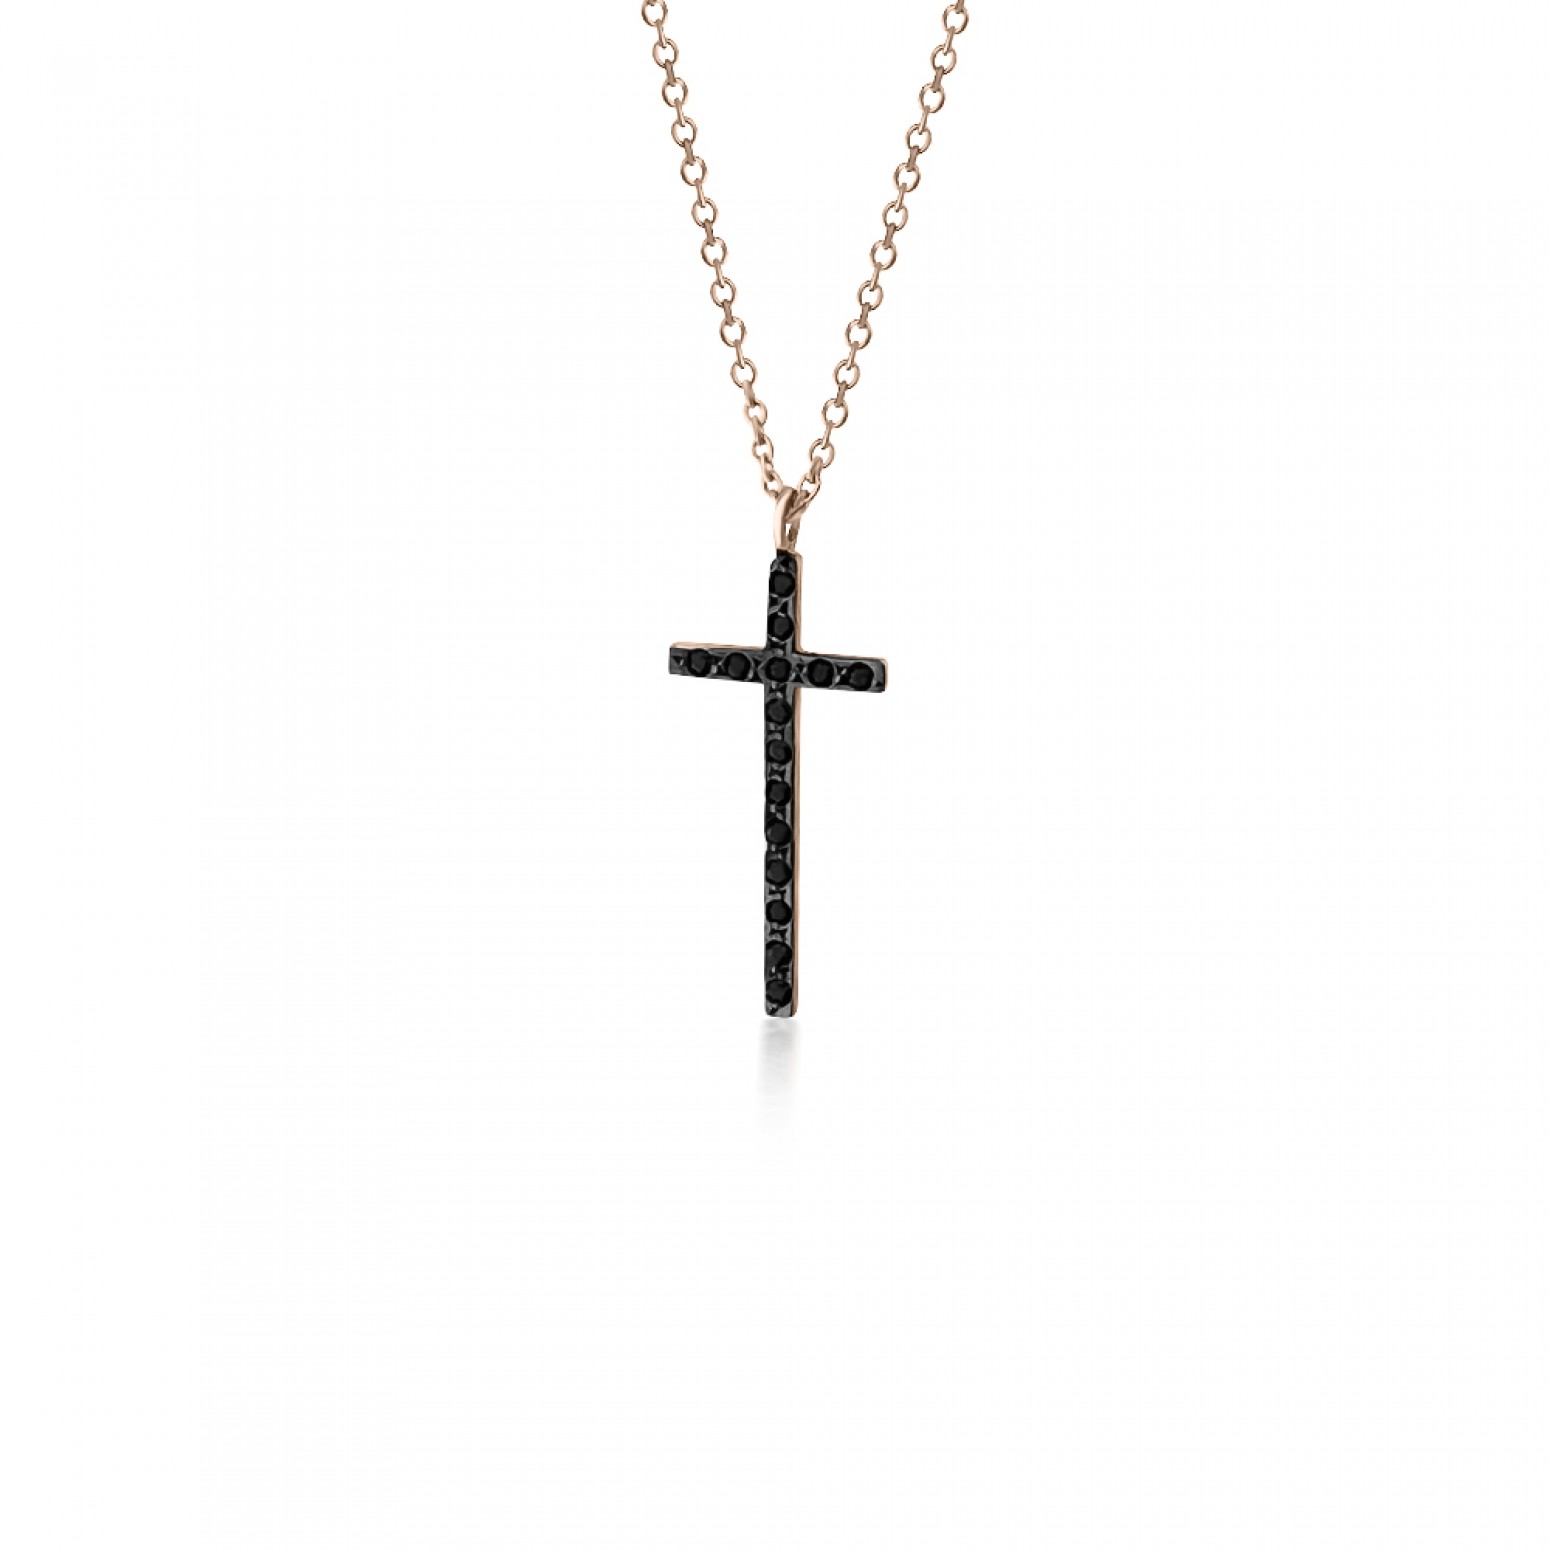 Cross necklace, Κ9 pink gold with black zircon, ko5469 NECKLACES Κοσμηματα - chrilia.gr